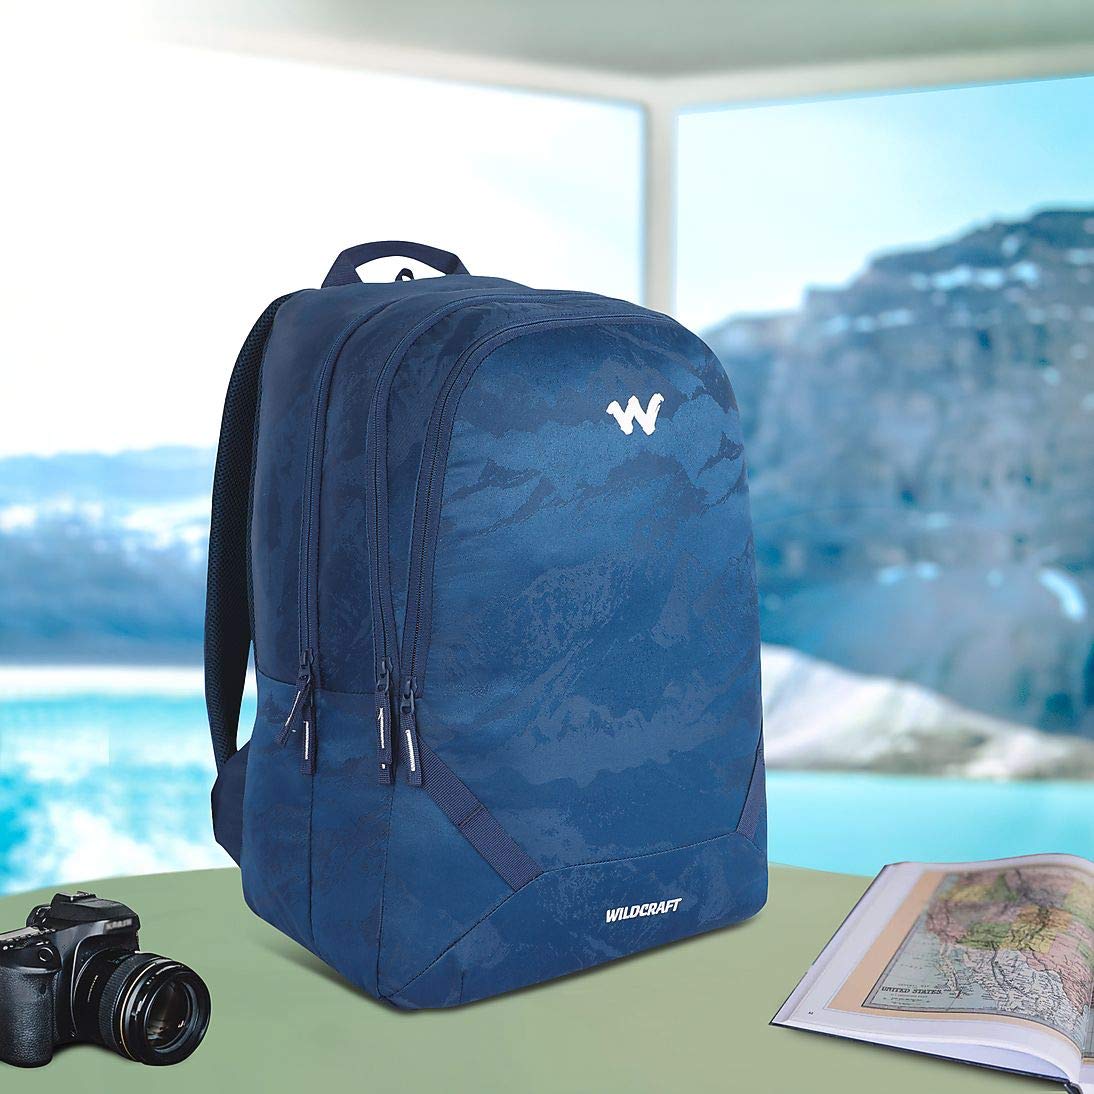 Backpacks - Buy Backpacks Online for Travel & Outdoor | Wildcraft